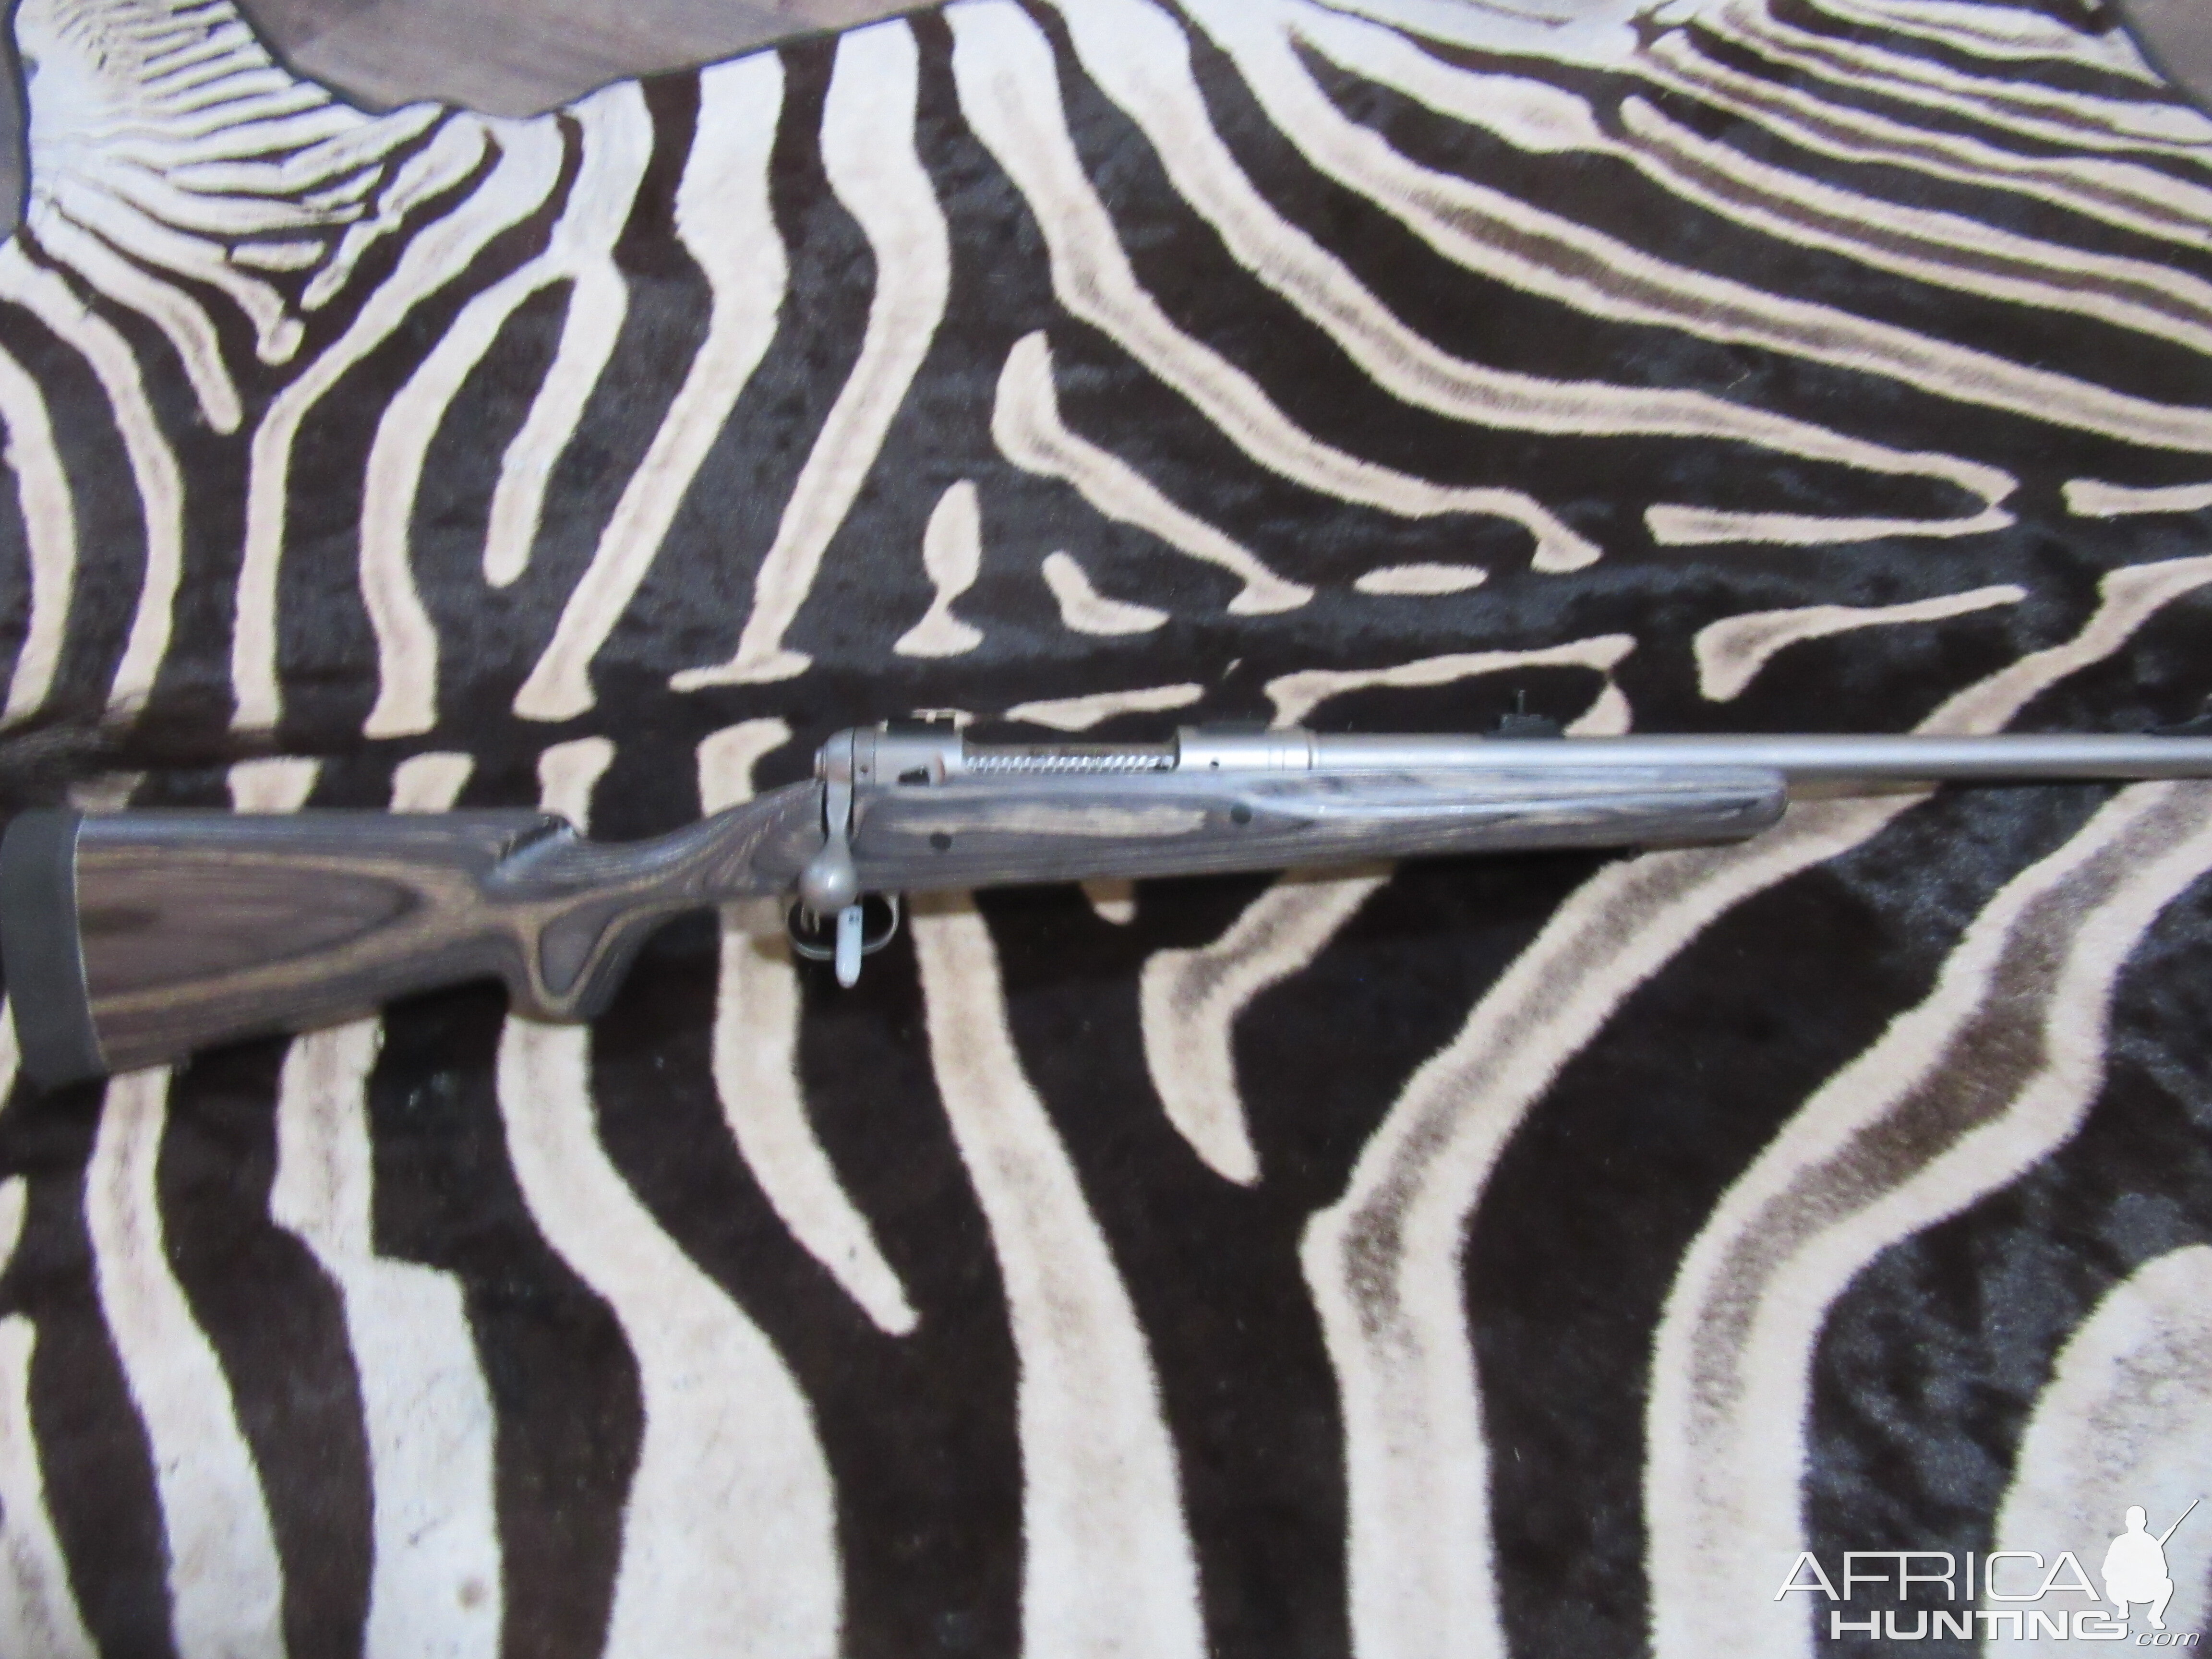 Savage 116 Brush Hunter in 375 Ruger Rifle